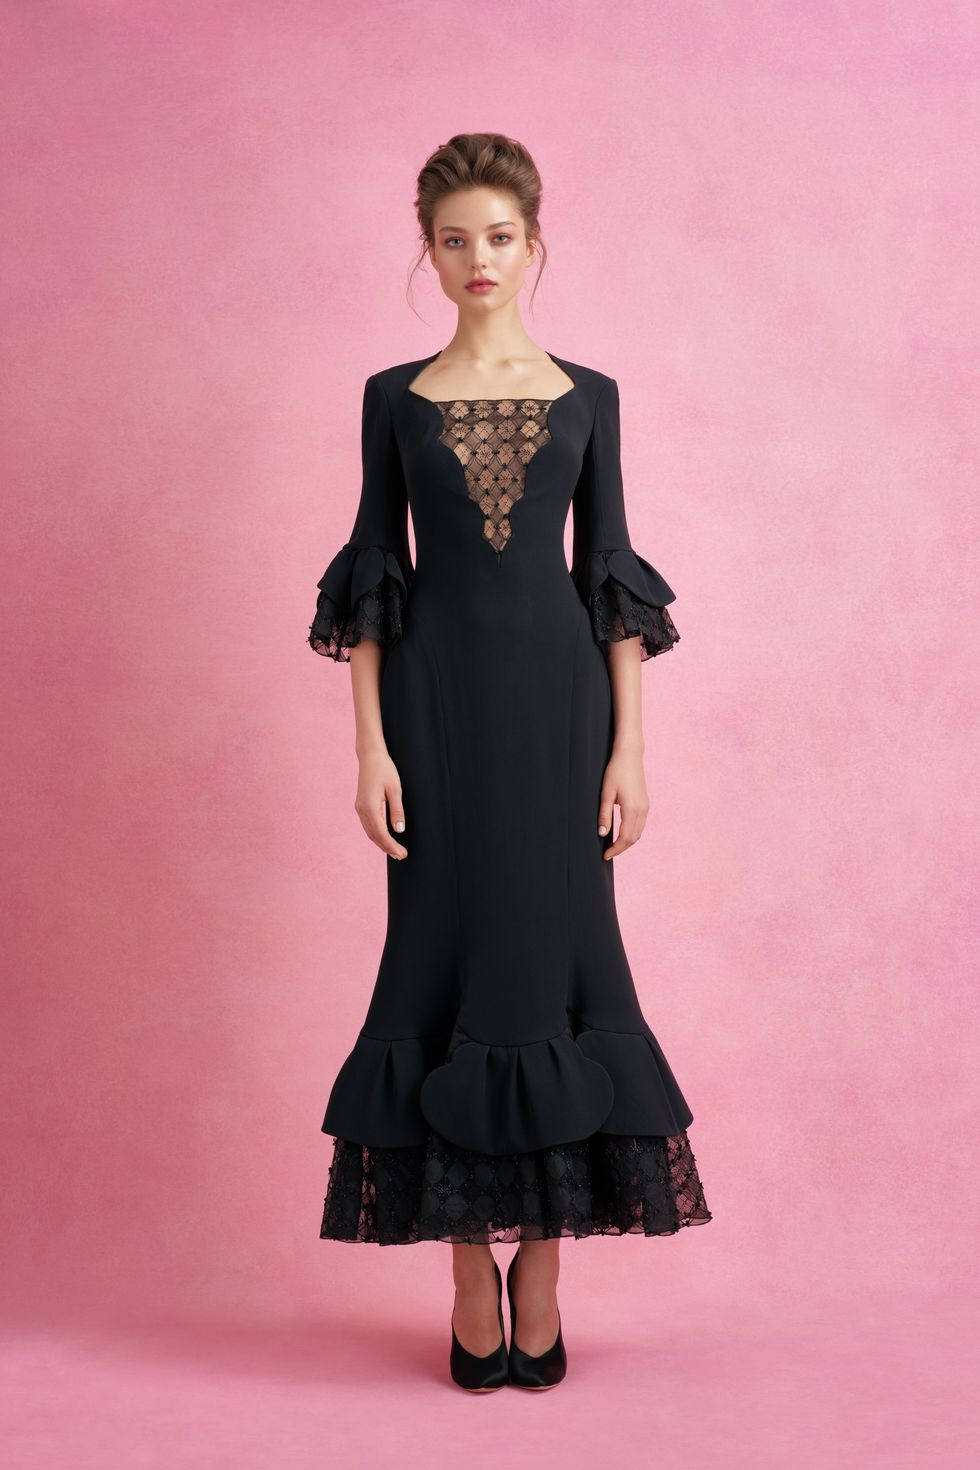 Ulyana Sergeenko couture spring/summer 2018 collection -   15 dress 2018 spring ideas